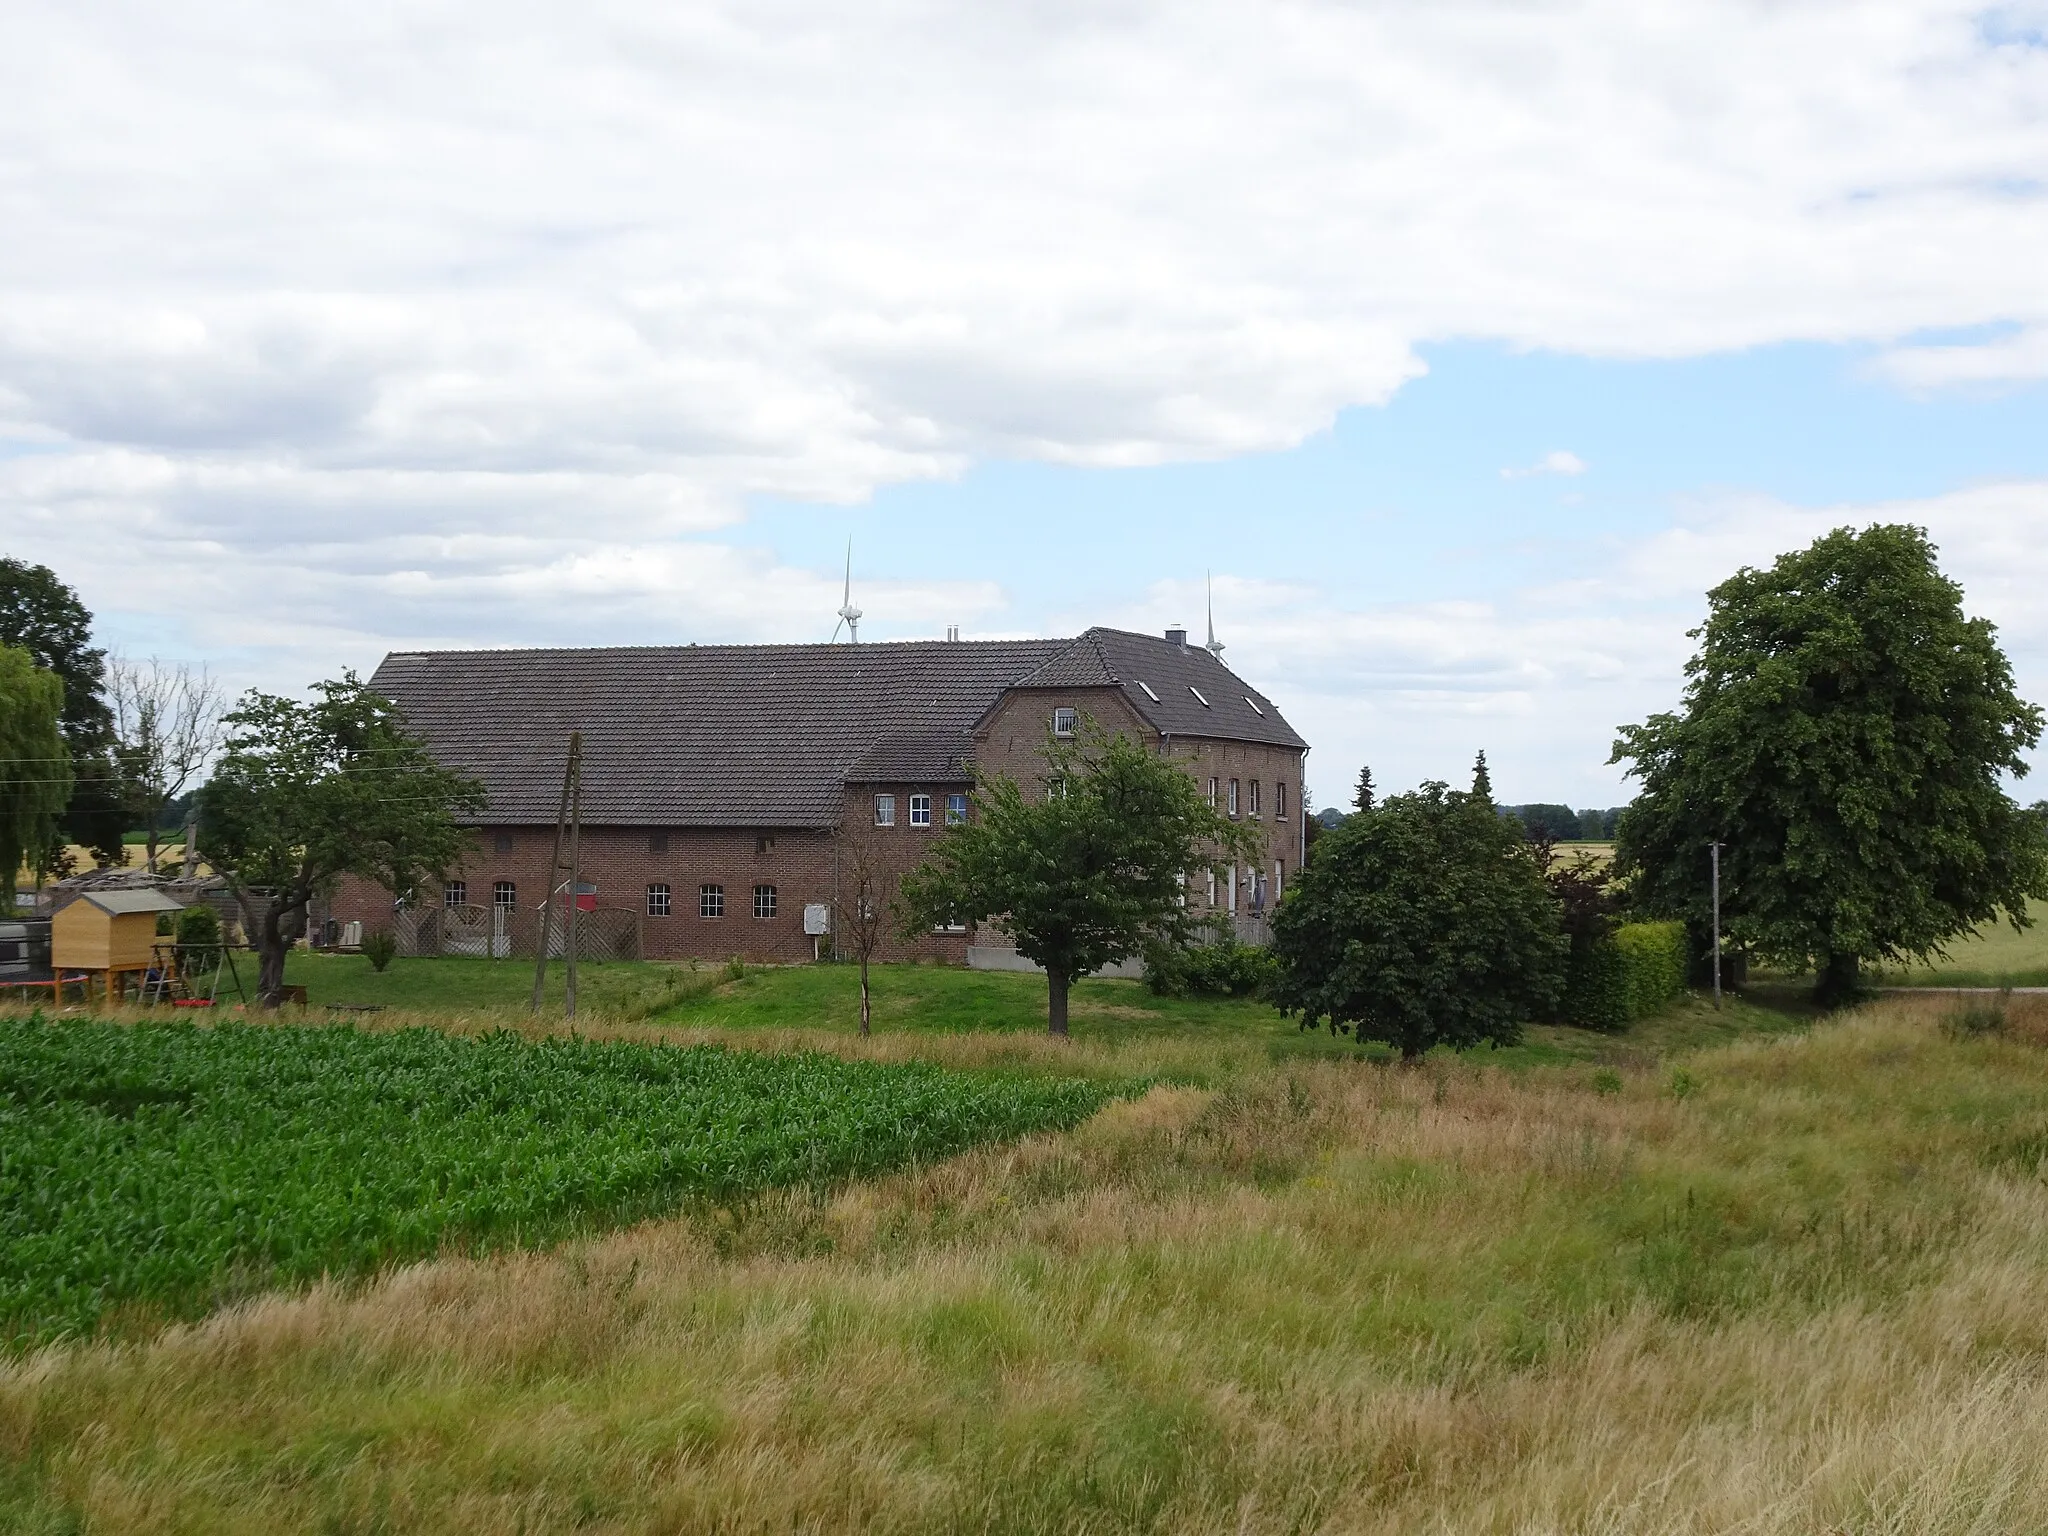 Photo showing: Rees-Esserden, Dammweg, oude boerderij pal achter de dijk